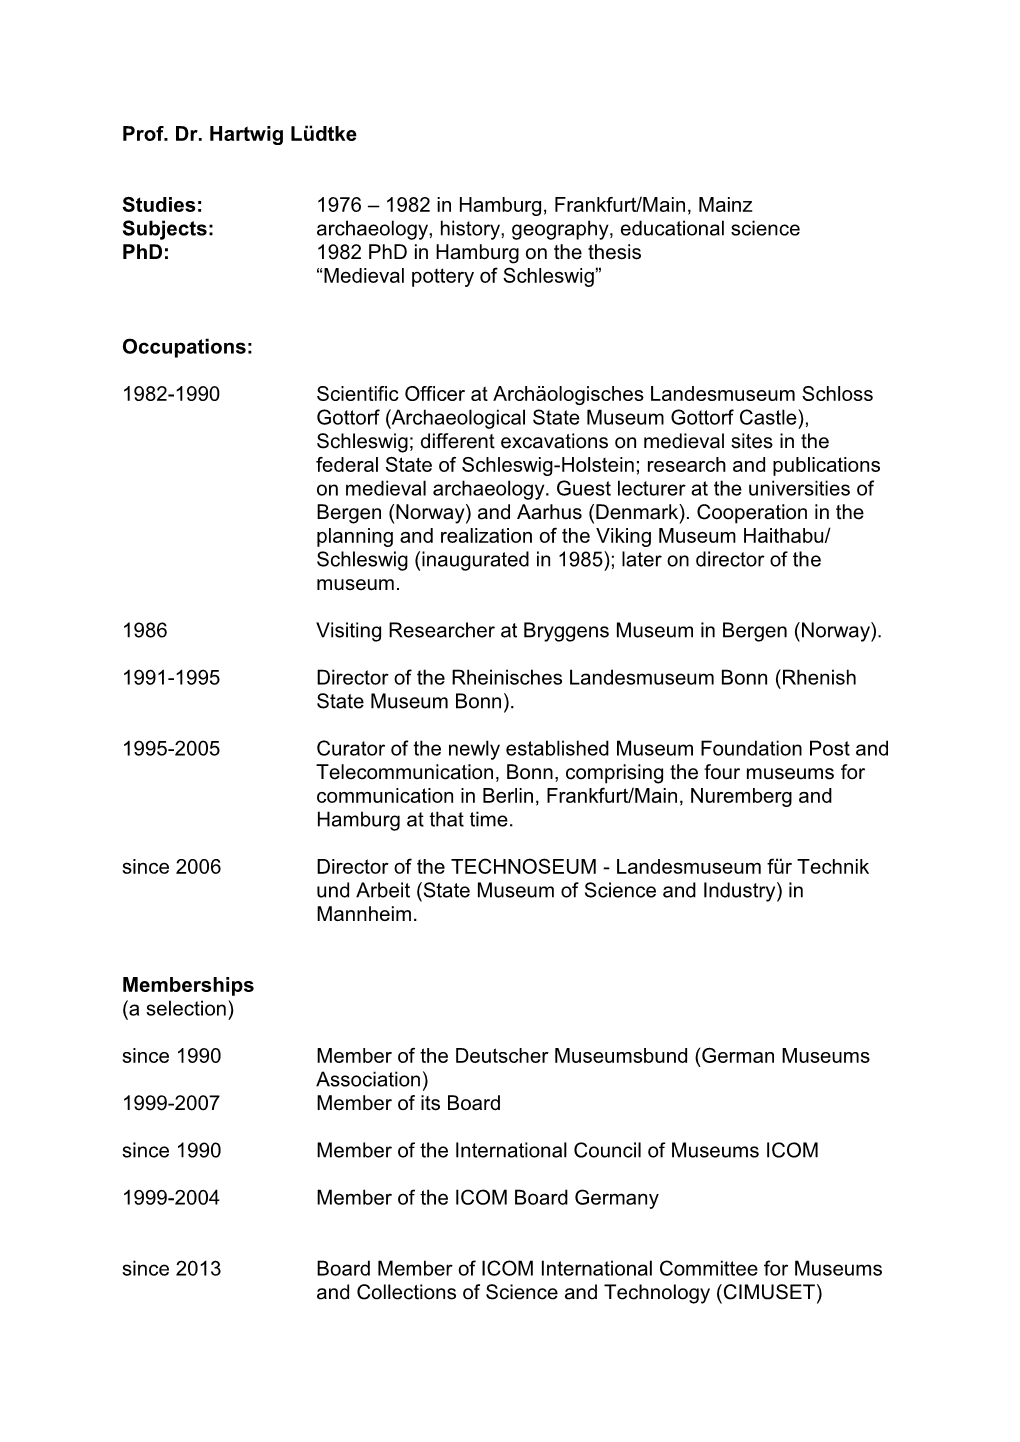 Prof. Dr. Hartwig Lüdtke Studies: Subjects